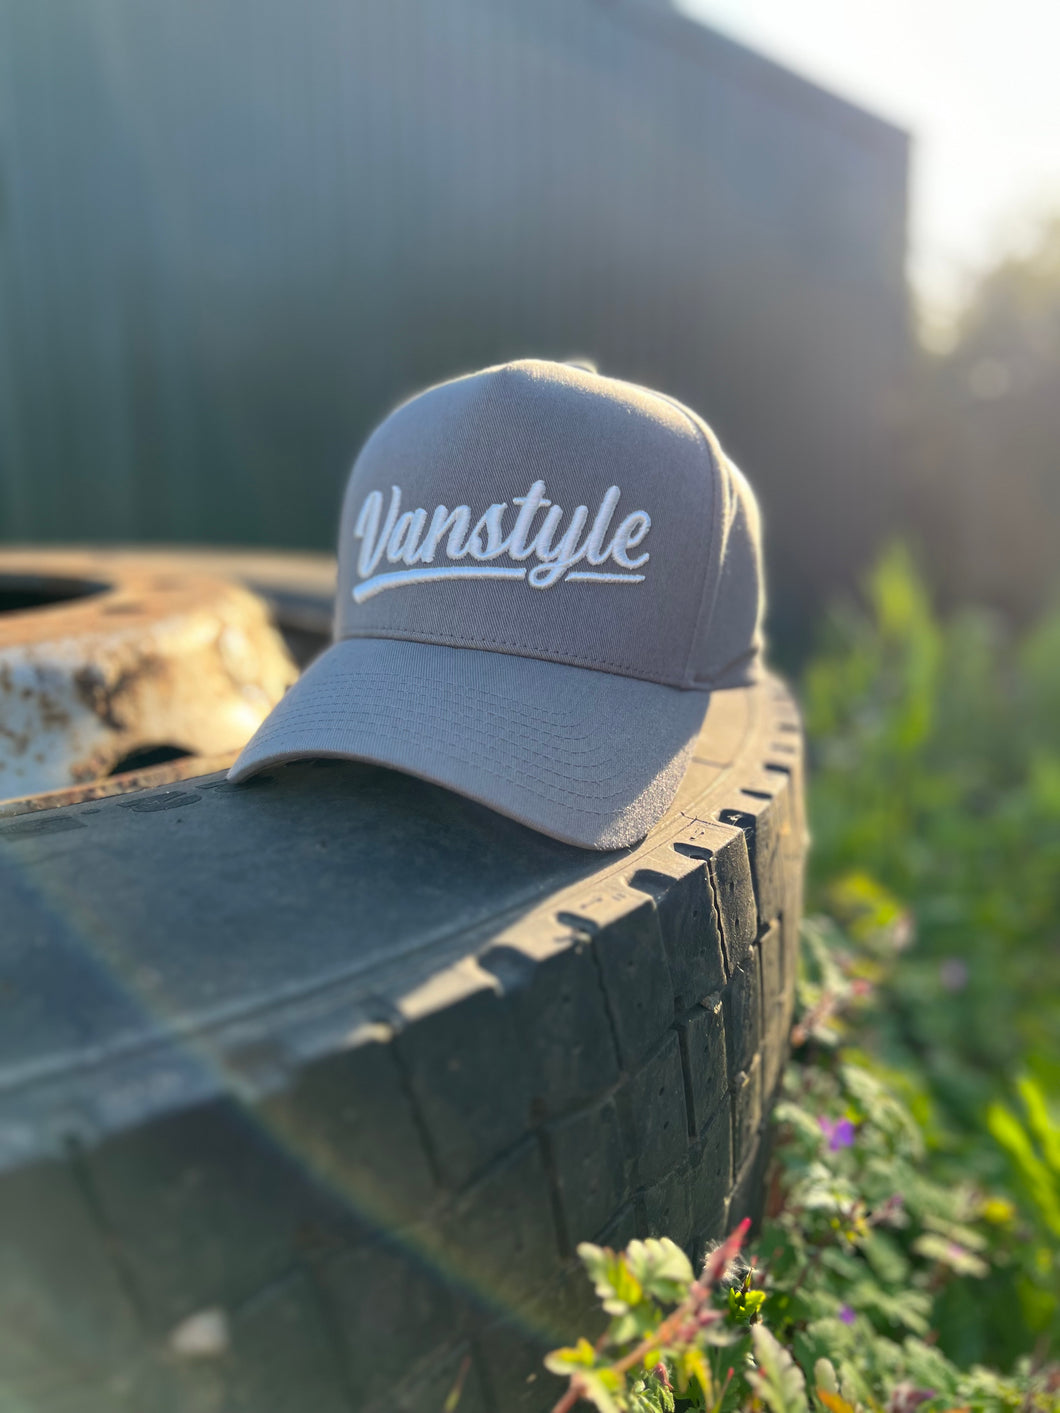 VanStyle Grey Adjustable Baseball Cap